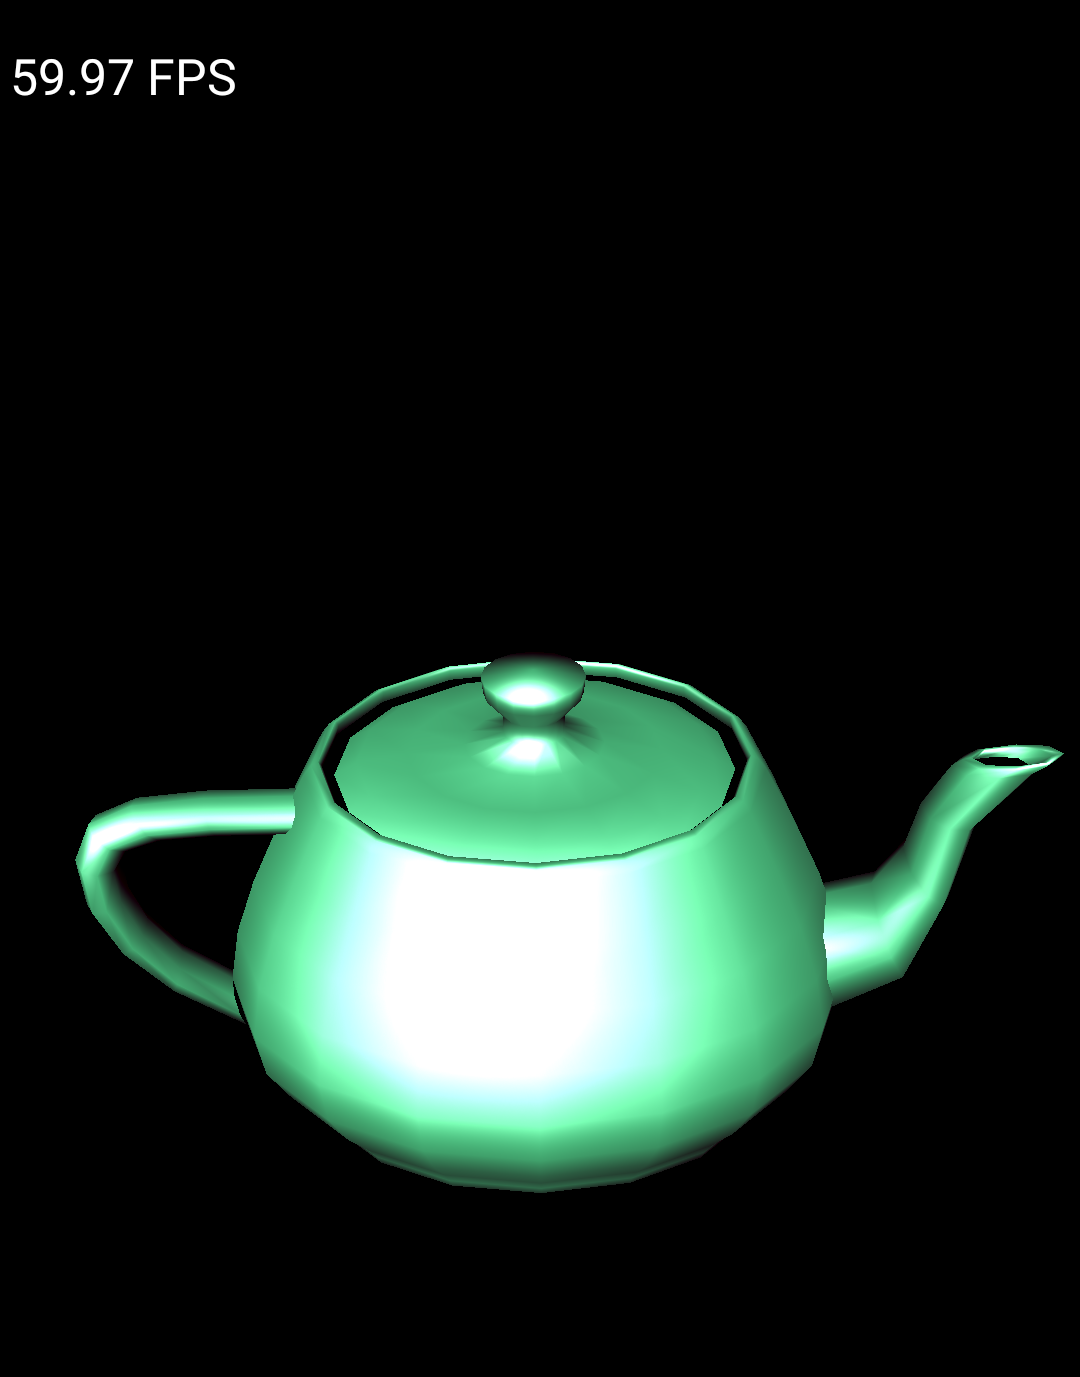 Contoh teapot yang berjalan di emulator